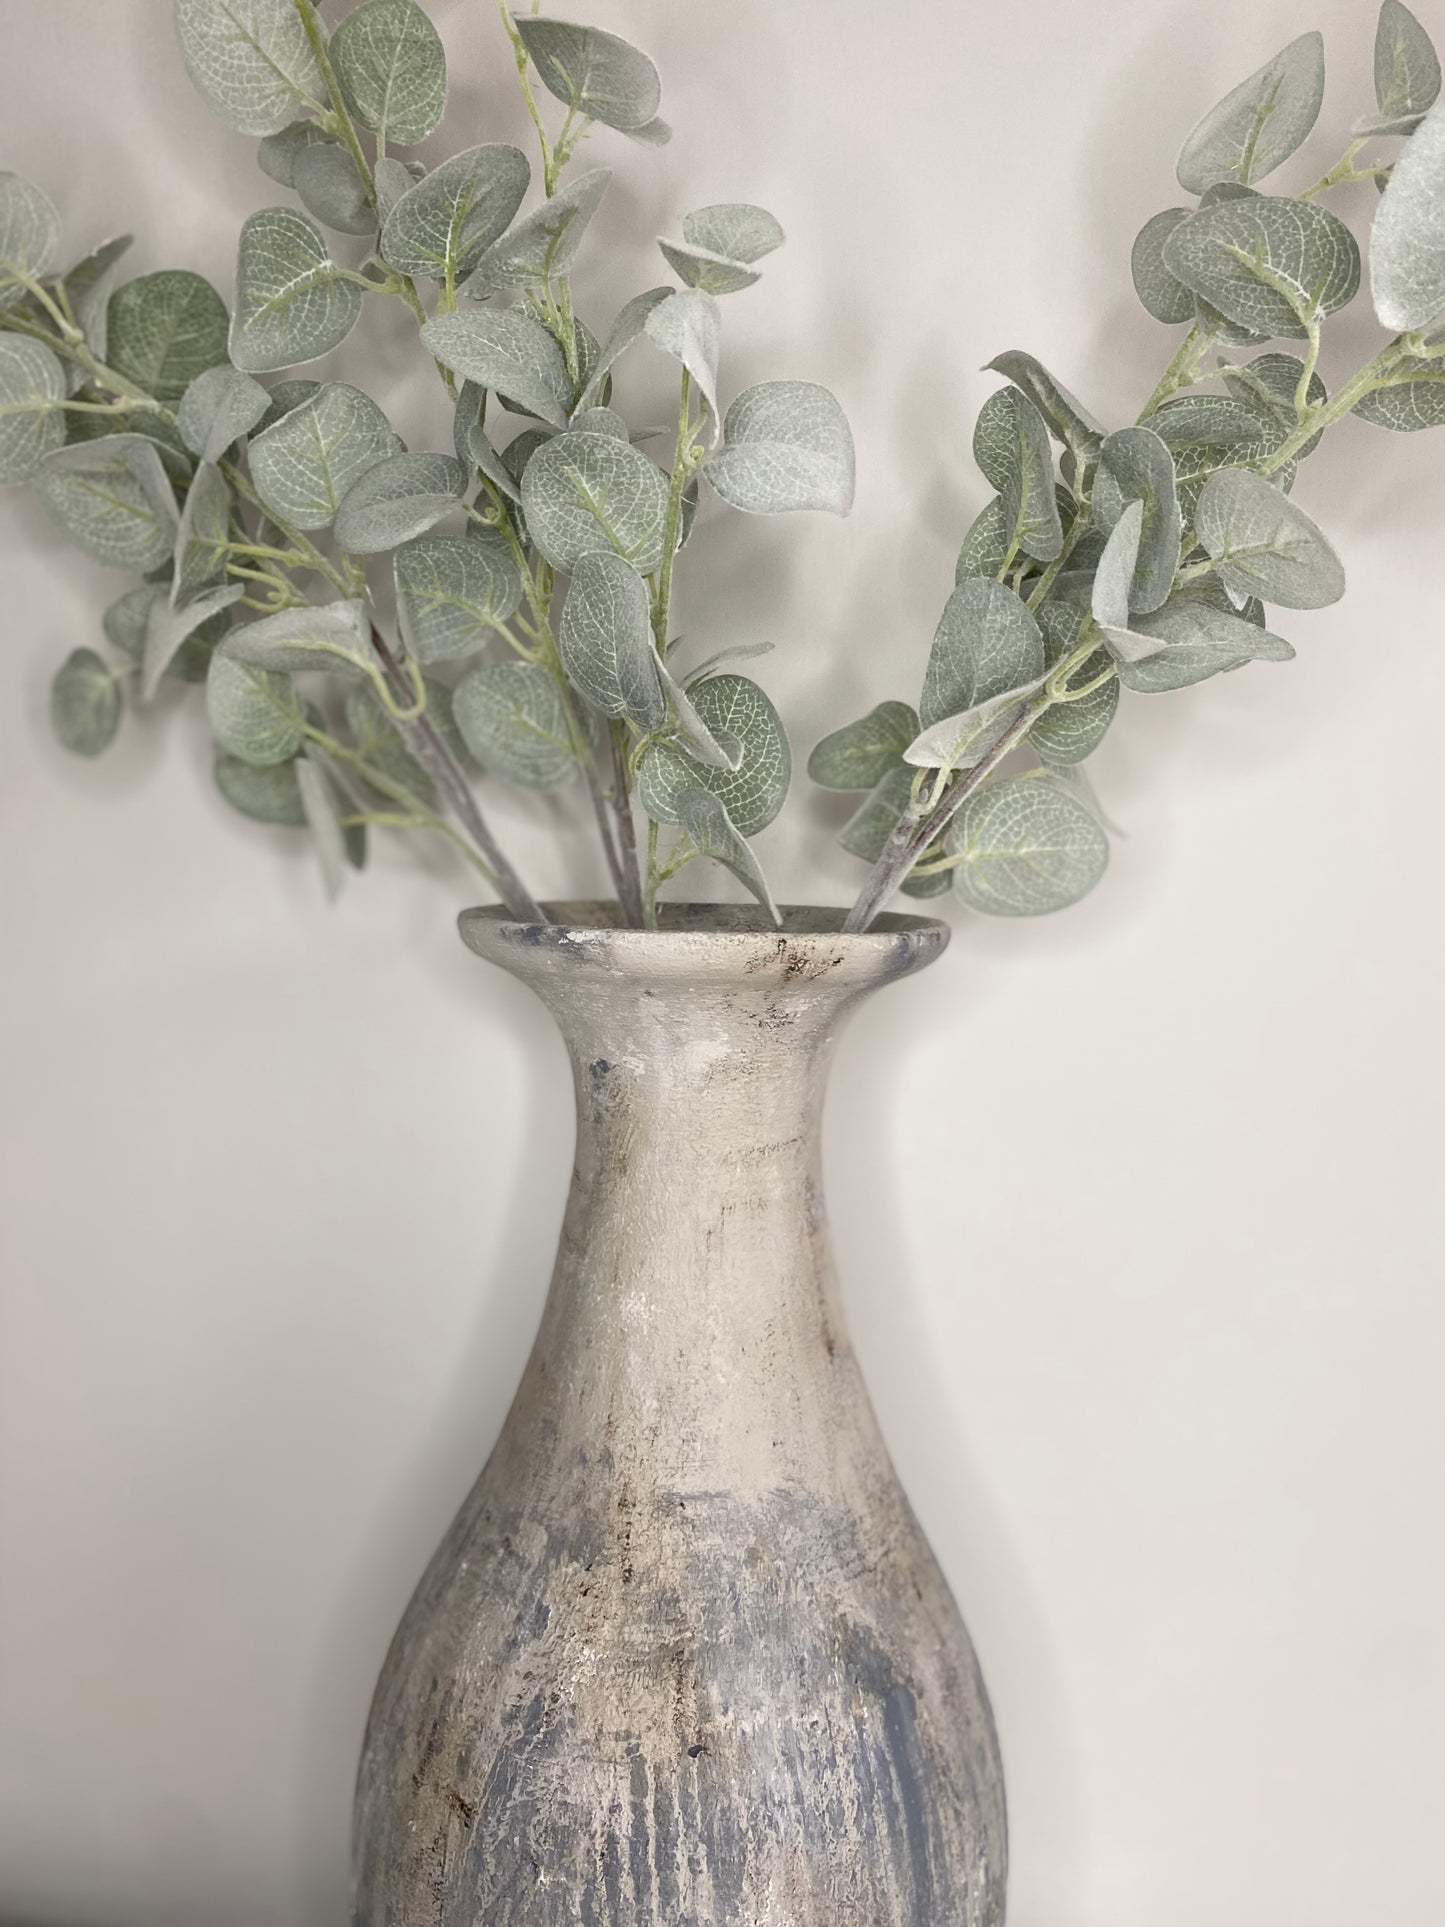 Large Rustic Grey Vase